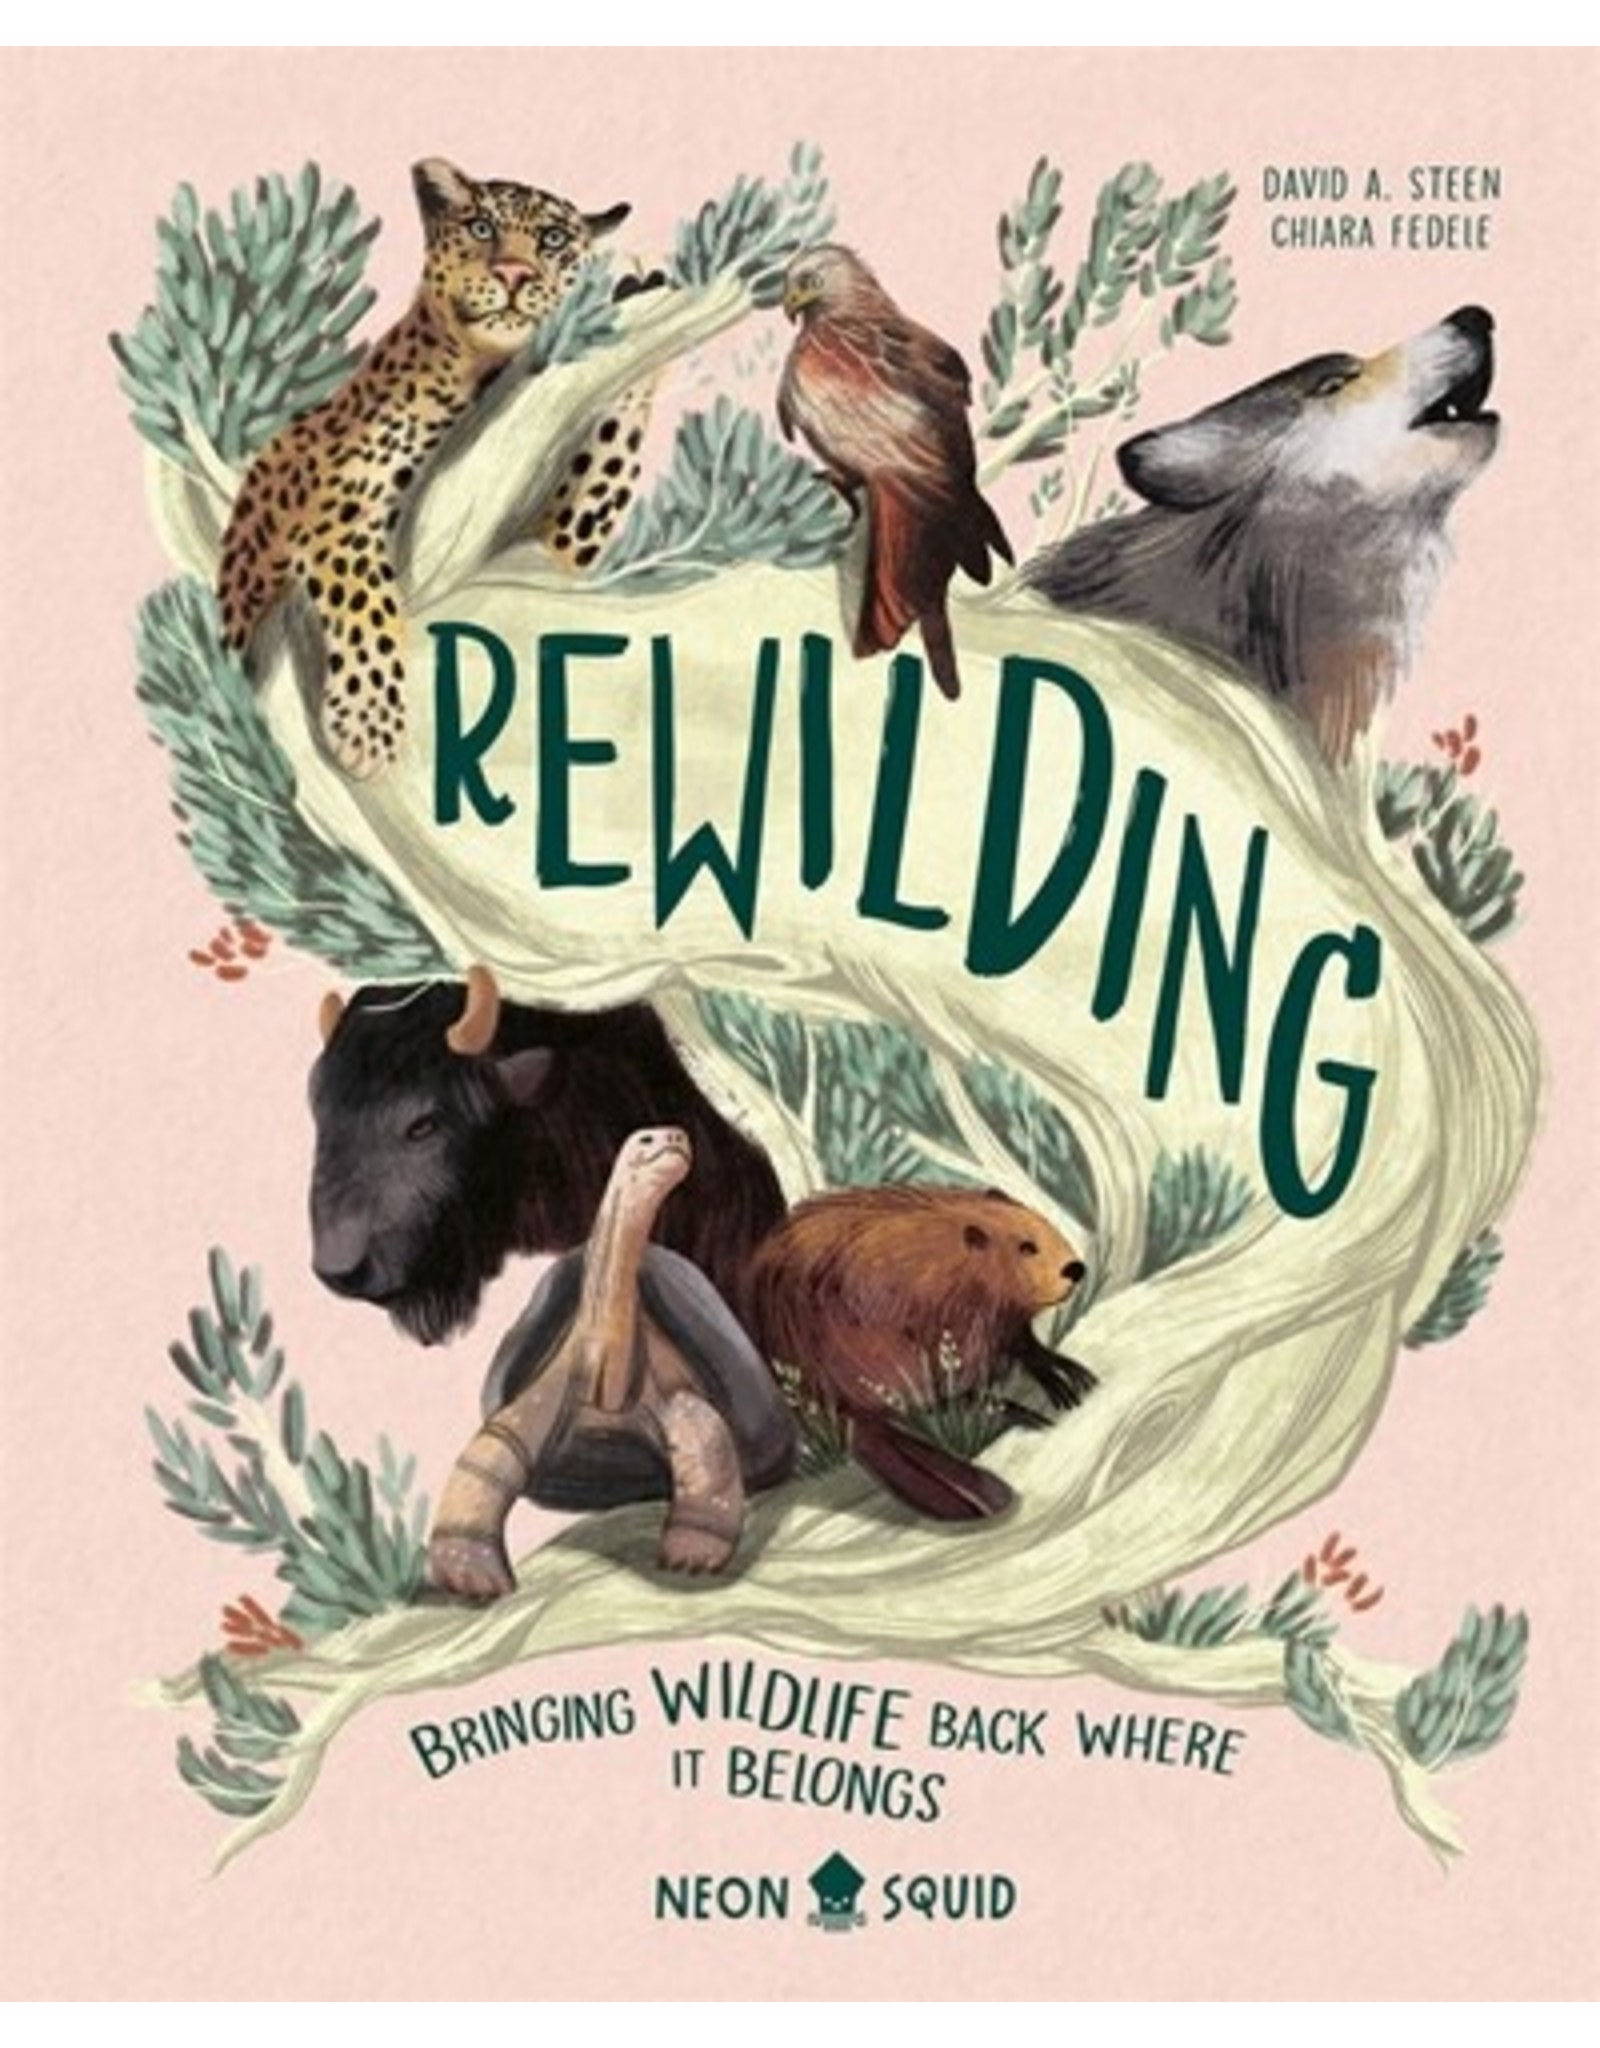 Books Rewilding : Bringing Wildlife Back Where It Belongs by David A. Steen and Chiara Fedele